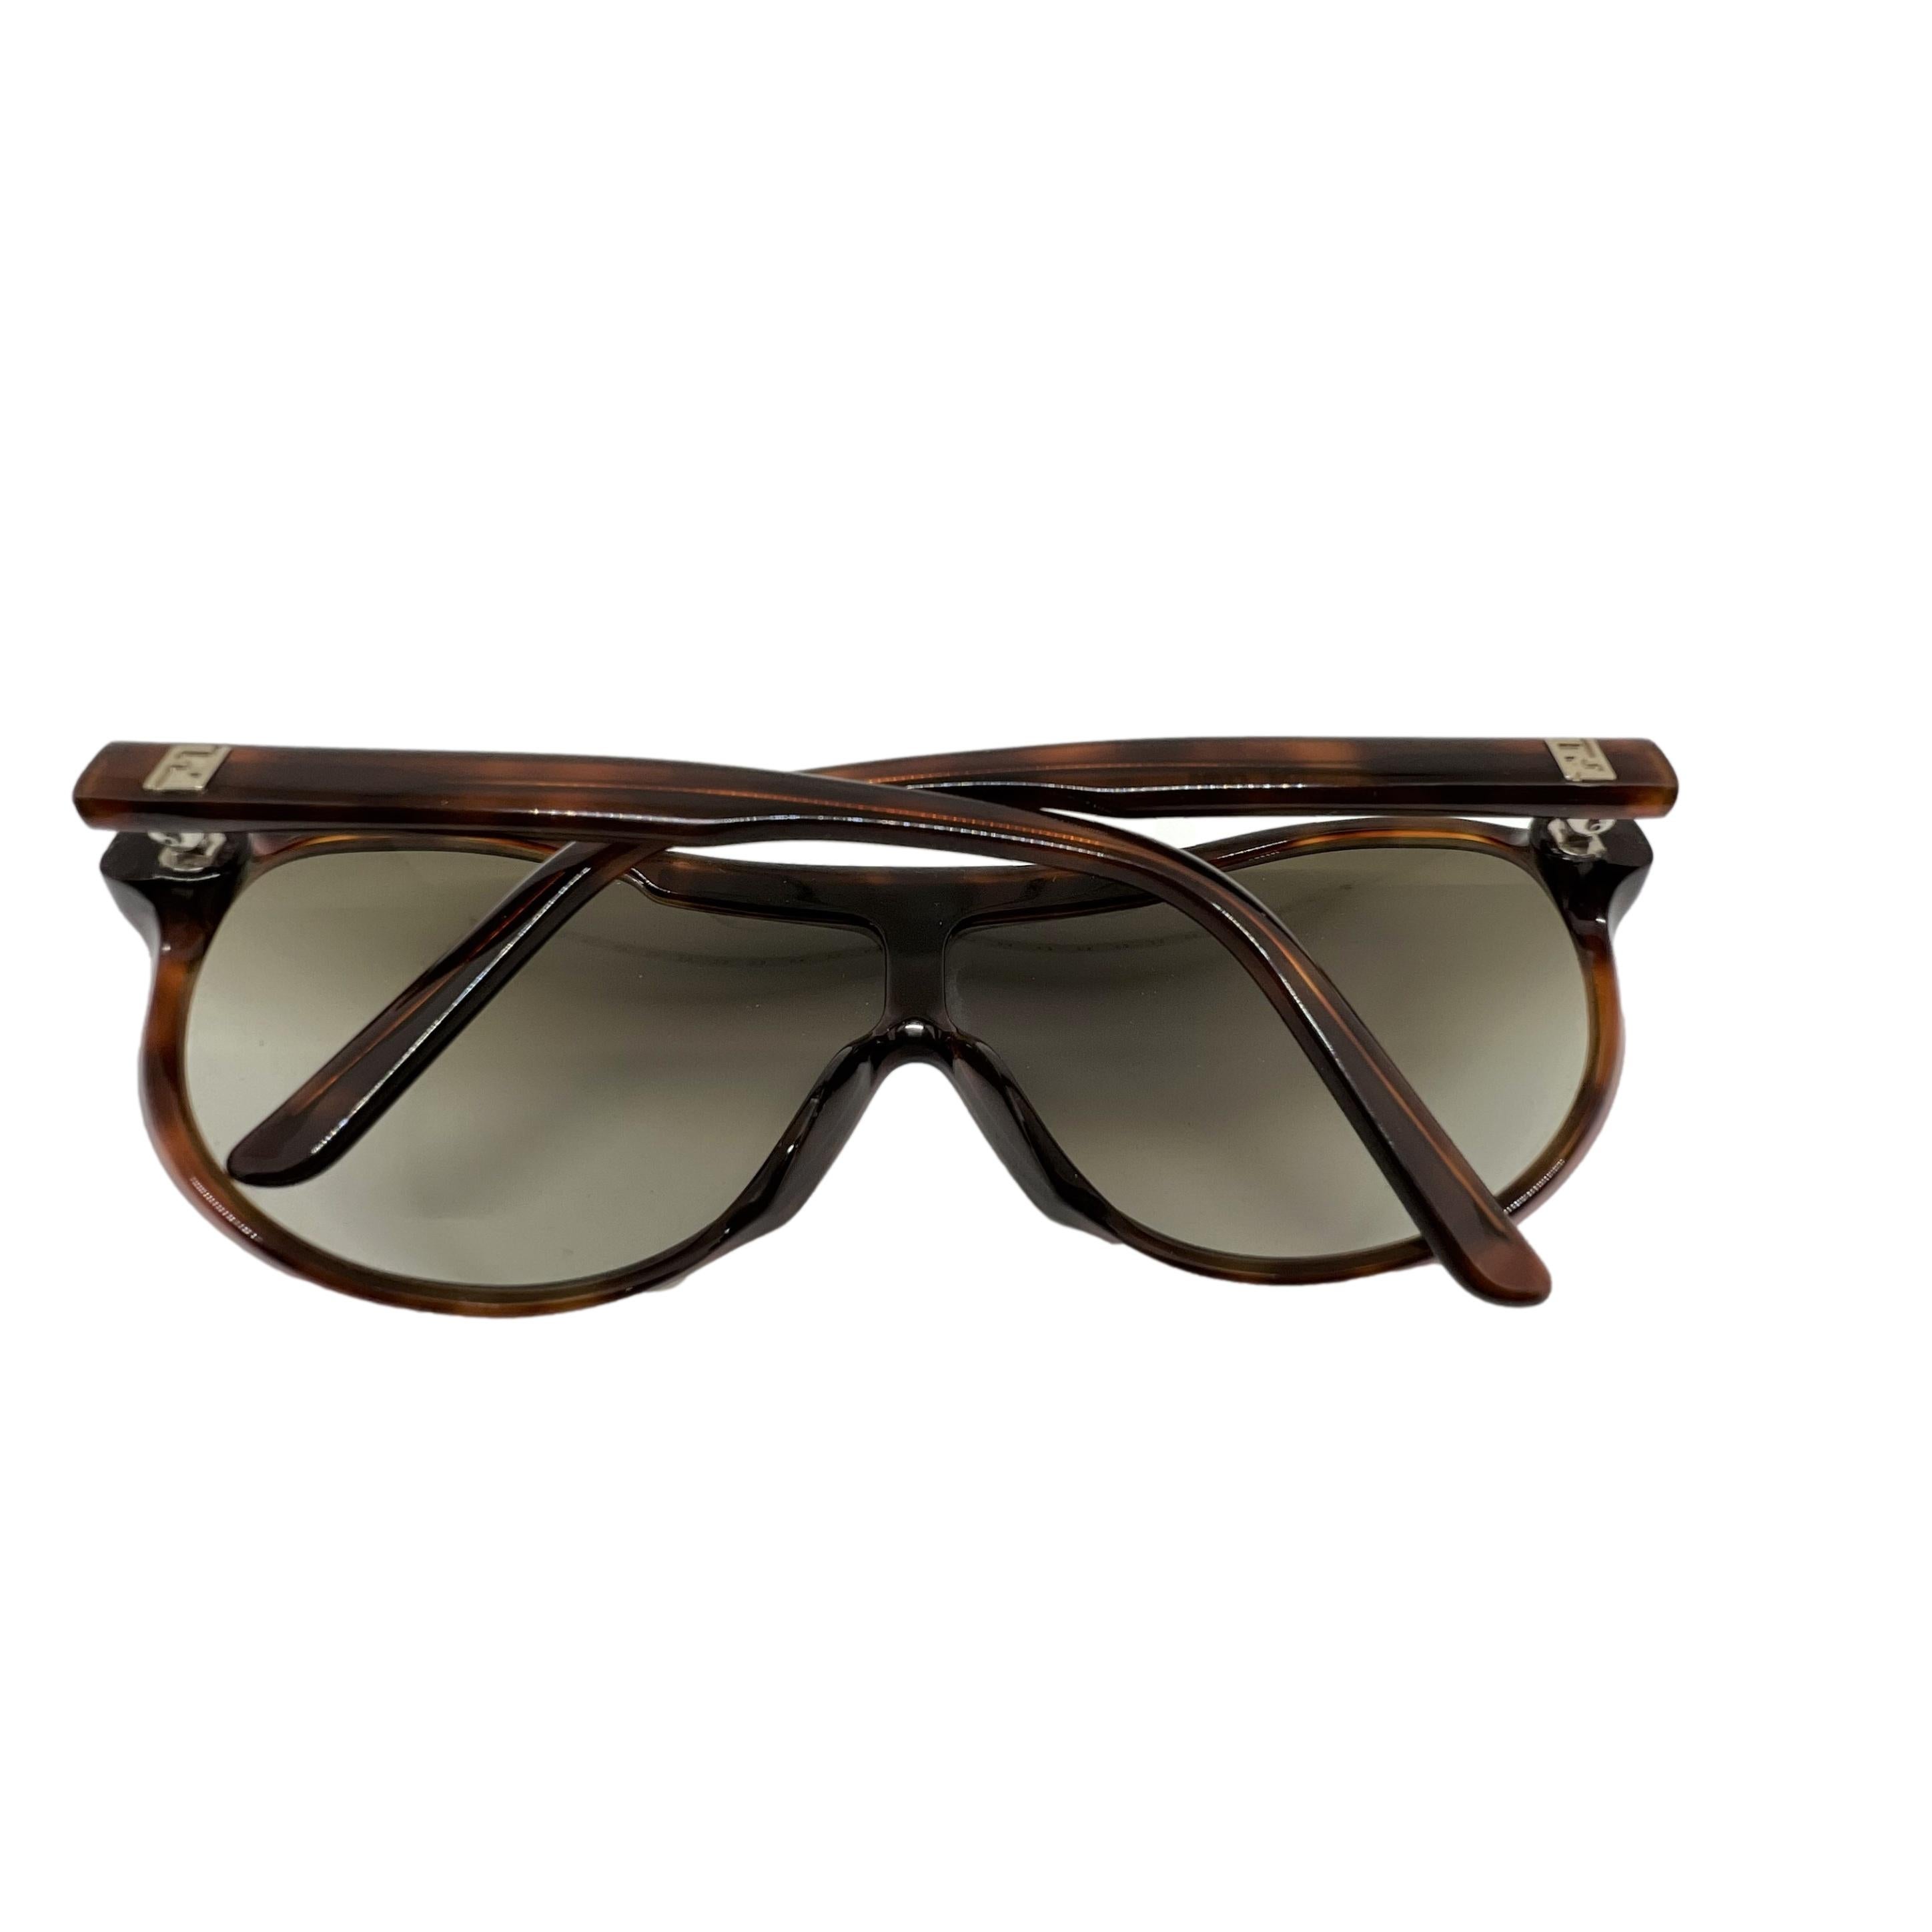 New Fendi Unisex Sunglasses with Case 1